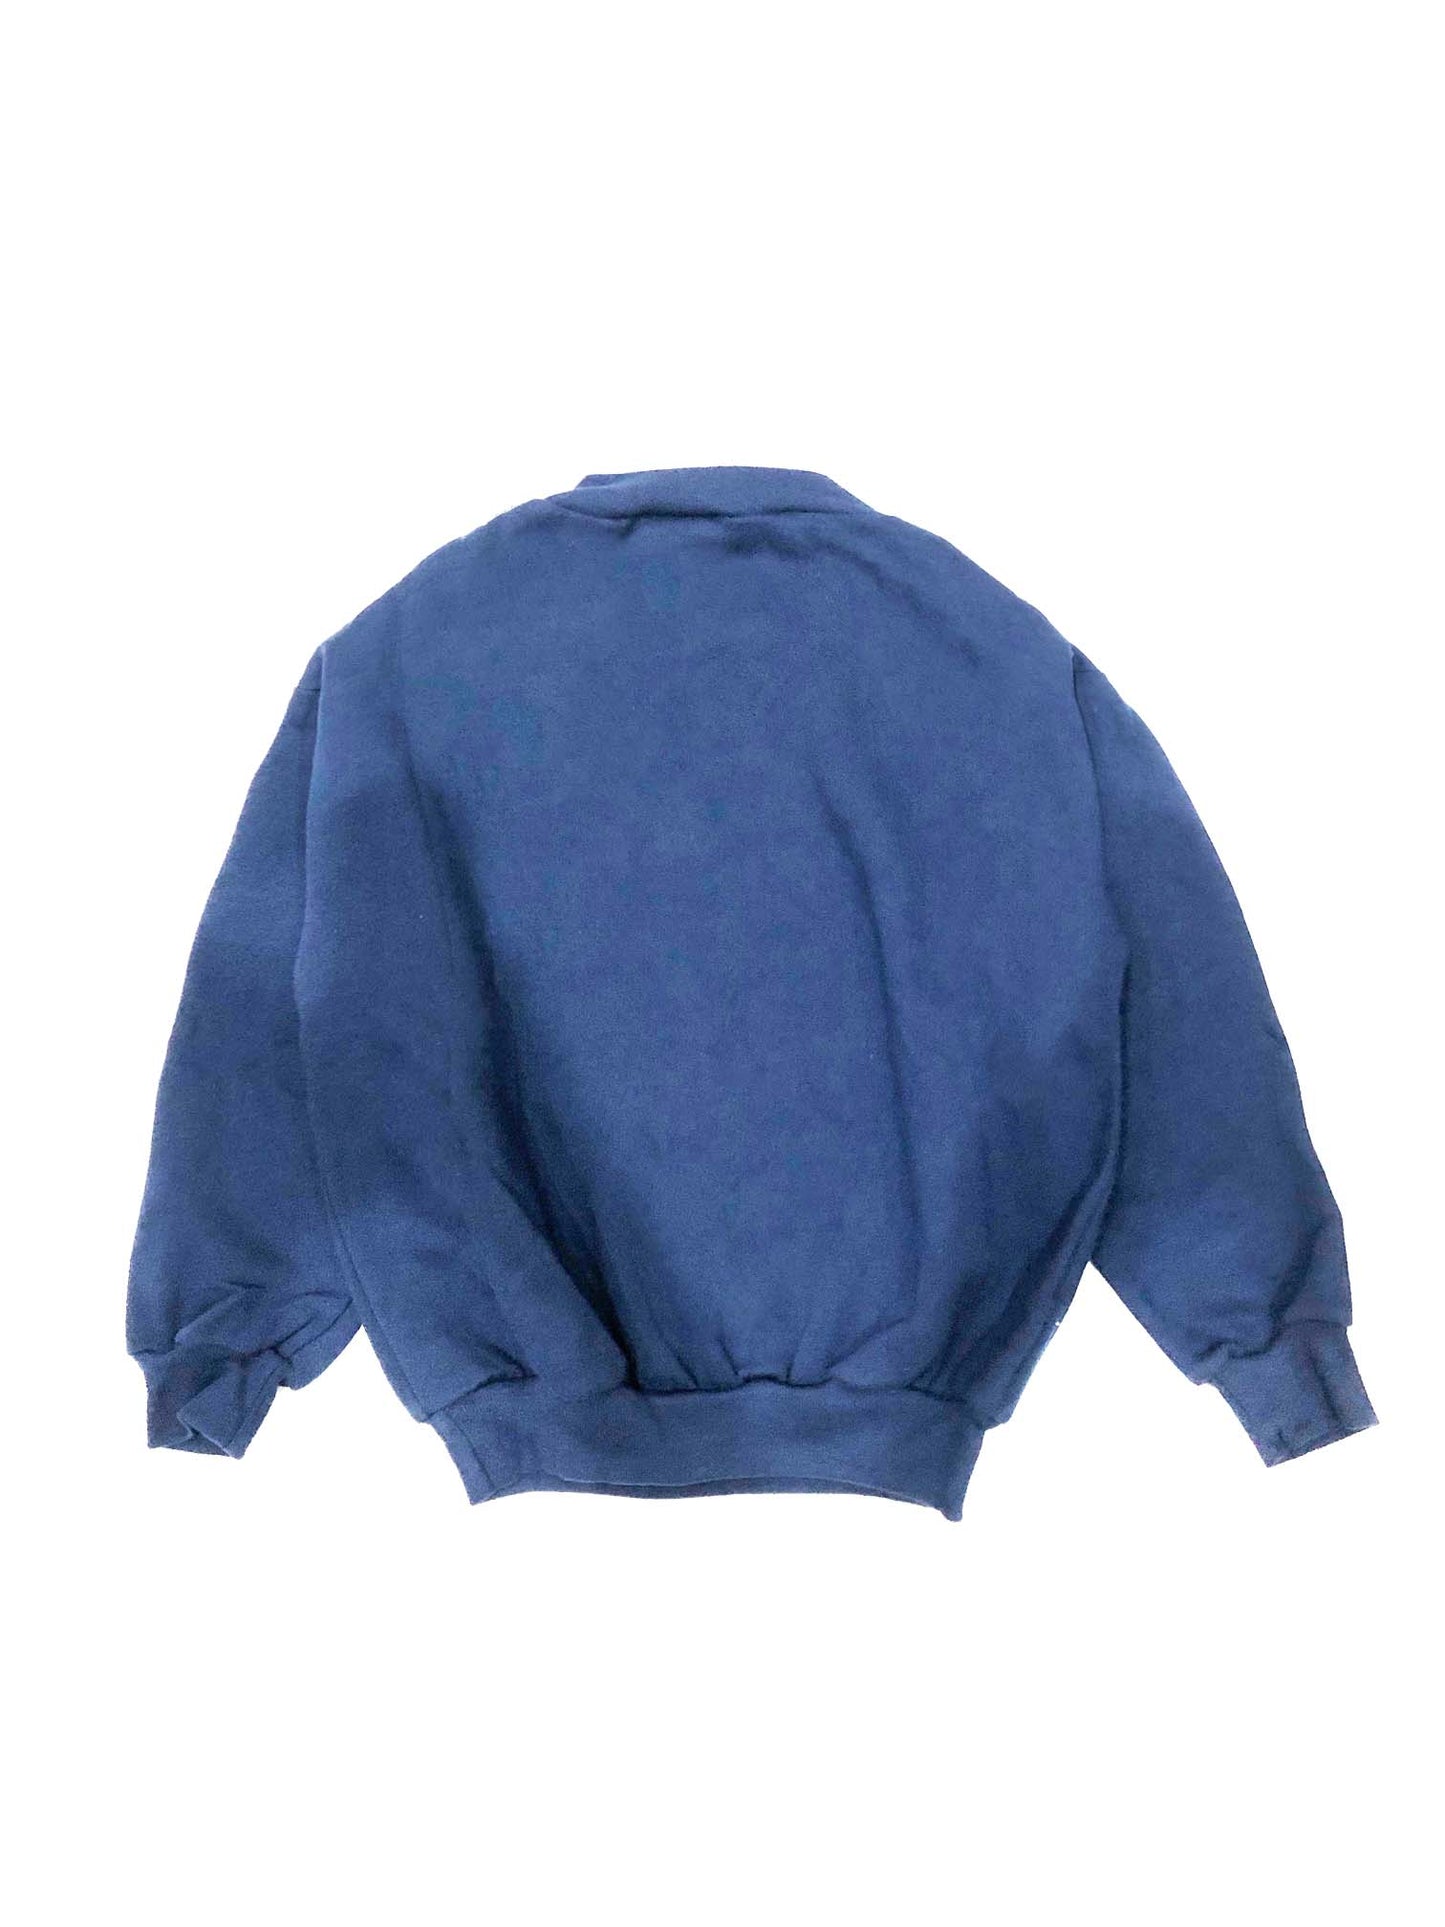 Unisex Navy Kids Sweatshirt S-XL